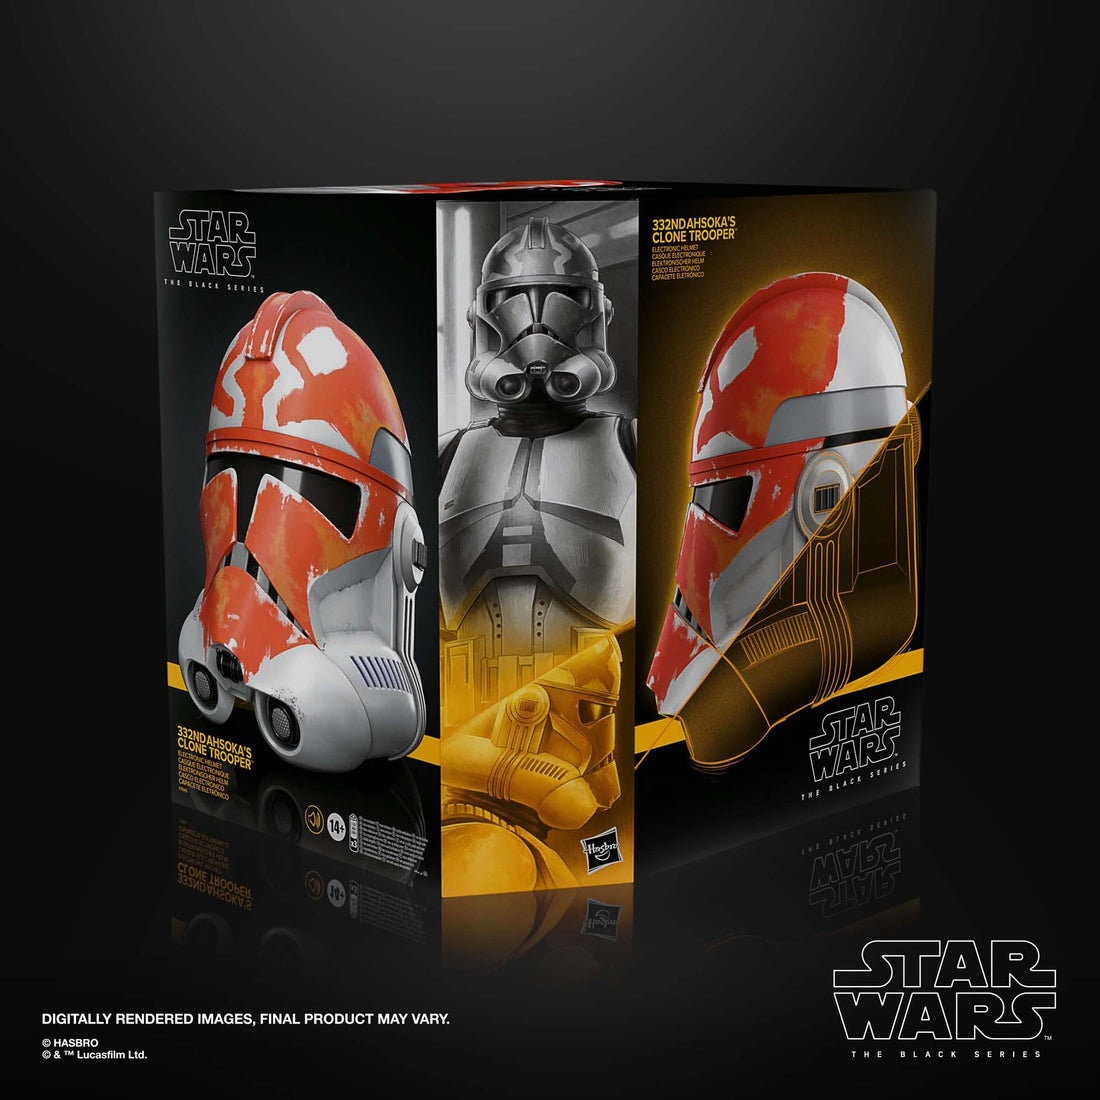 Star Wars The Black Series 332nd Ahsoka’s Clone Trooper Premium Electronic Helmet, The Clone Wars Adult Roleplay Item